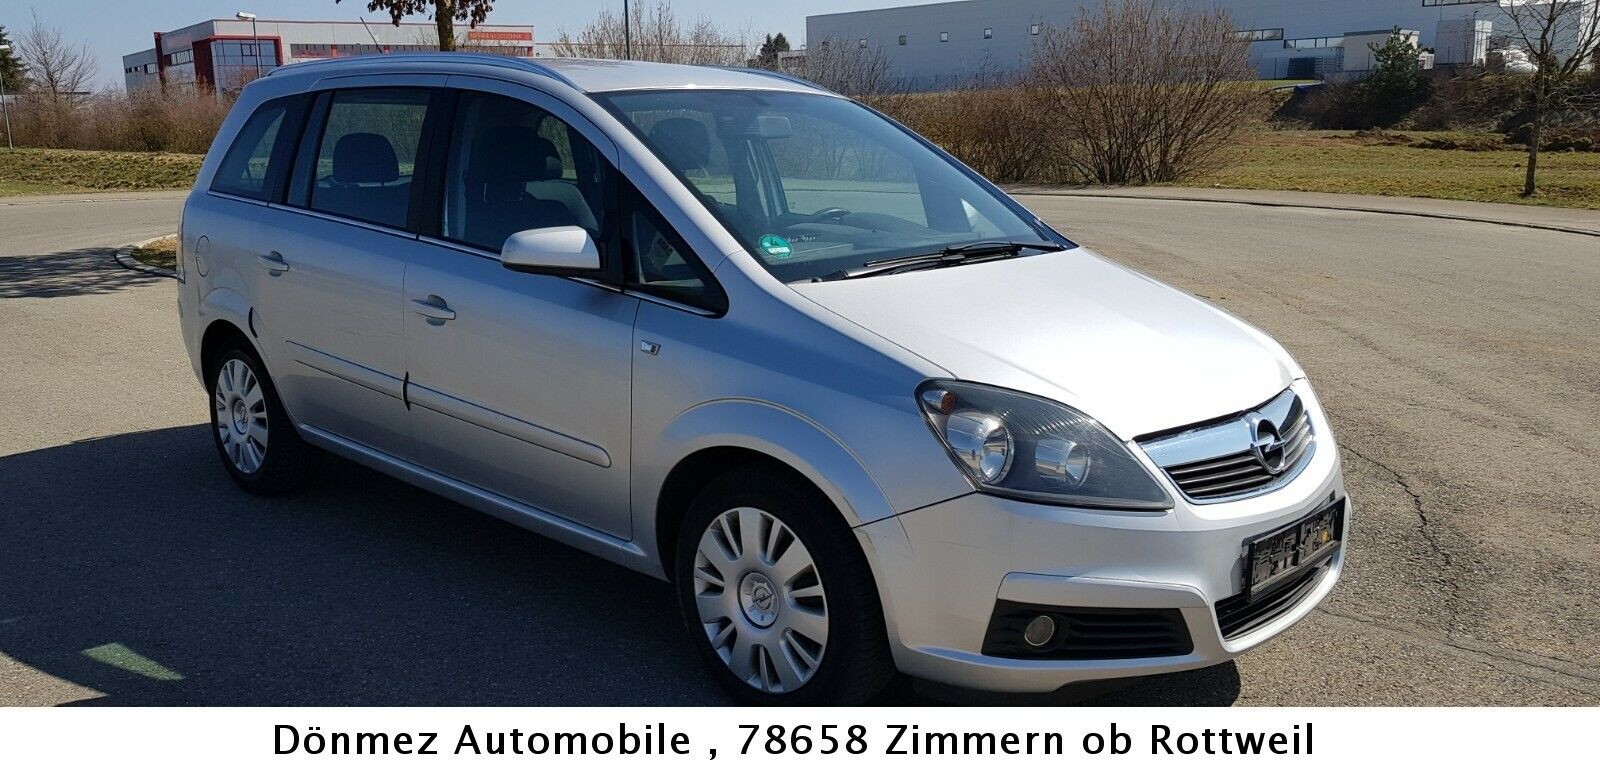 Opel Zafira B 1.9 CDTI CATCH ME Now gebraucht kaufen in Zimmern ob Rottweil  - Int.Nr.: 128 VERKAUFT